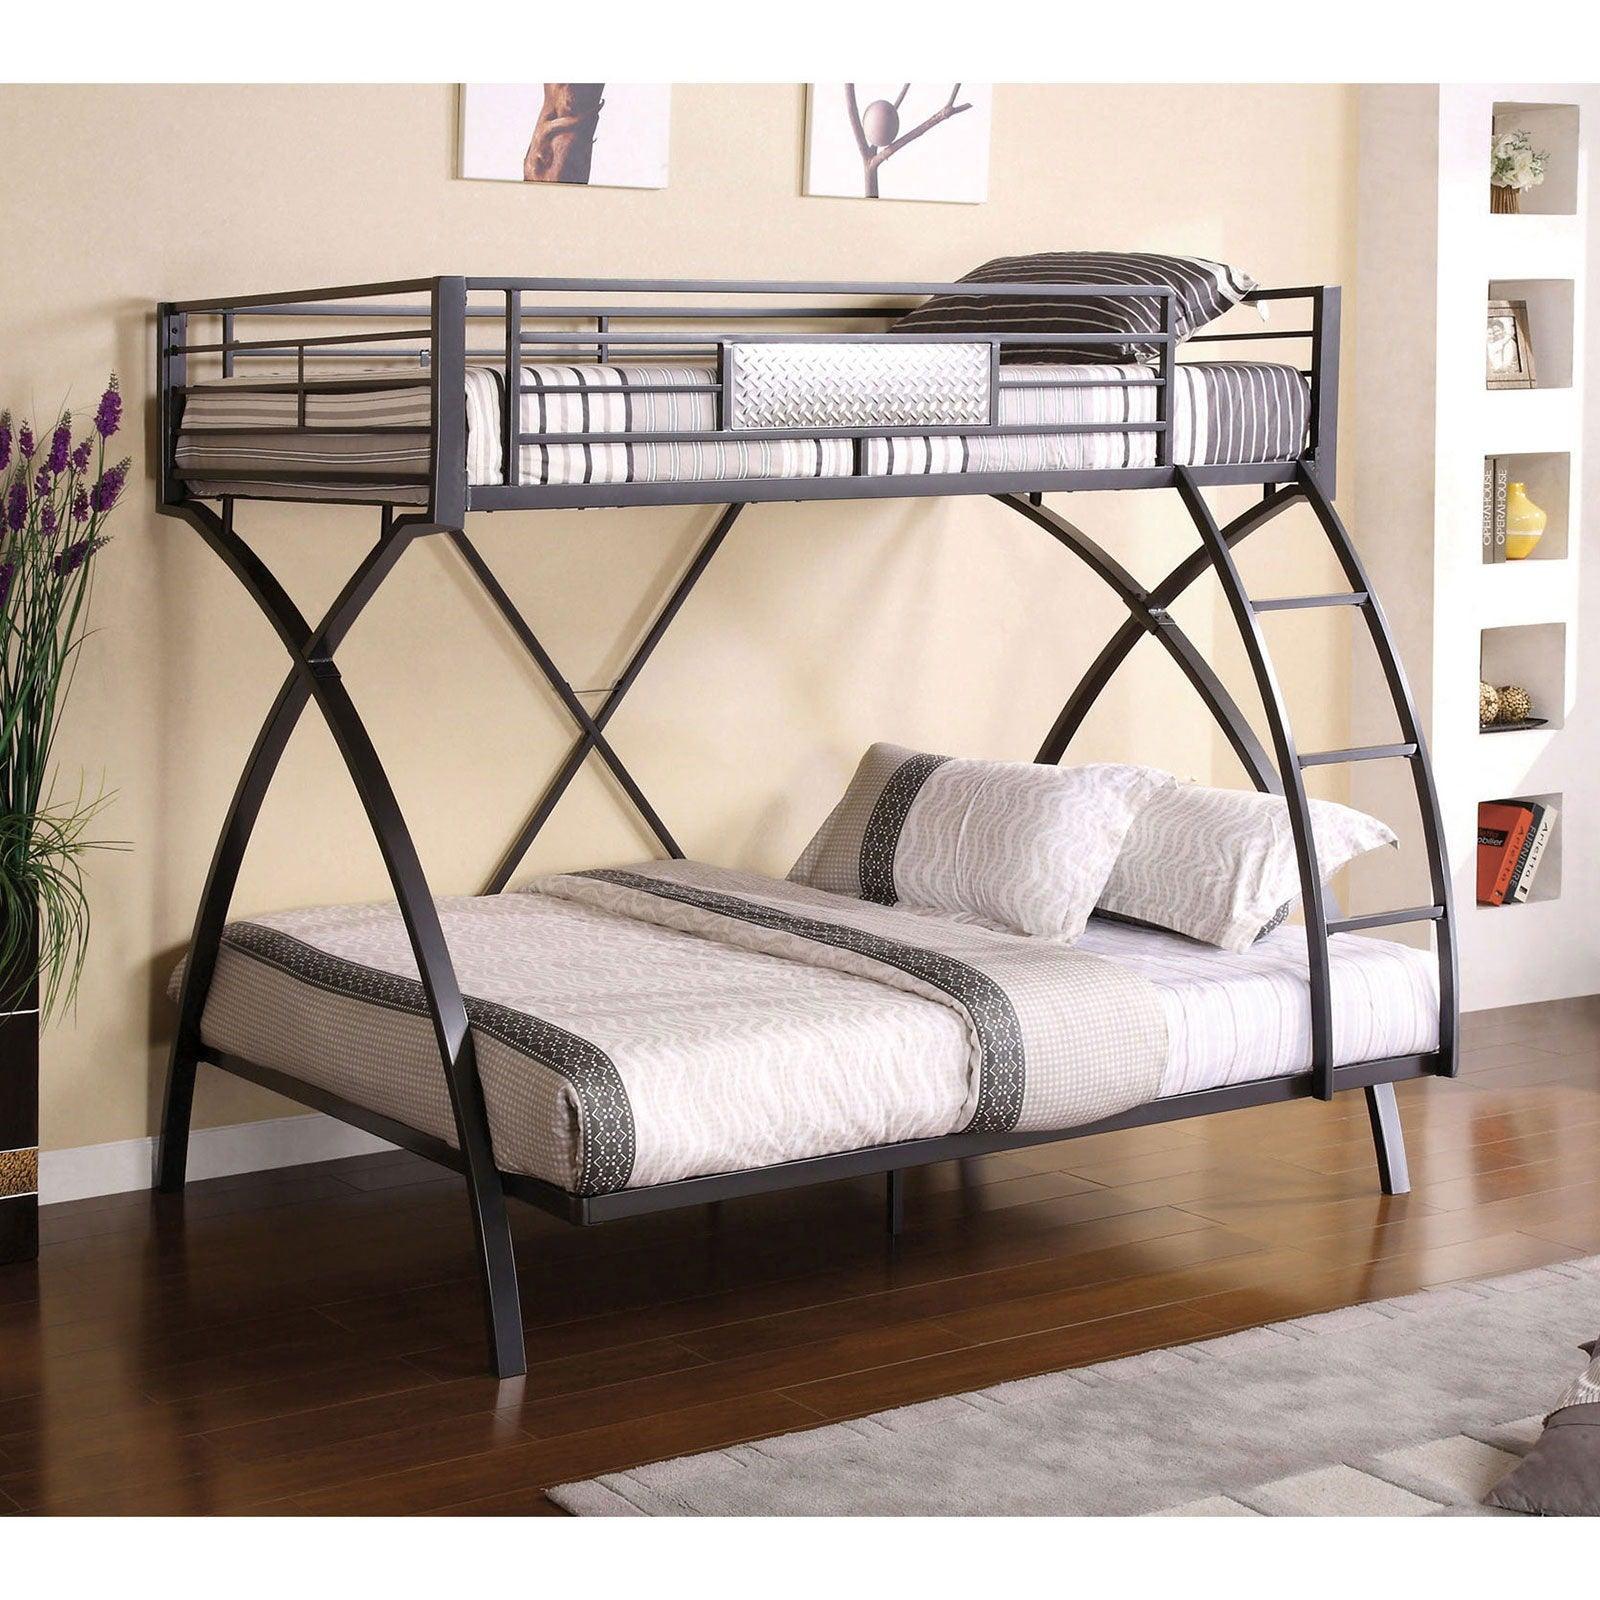 Furniture of America - Apollo - Twin Over Full Bunk Bed - Gun Metal - 5th Avenue Furniture